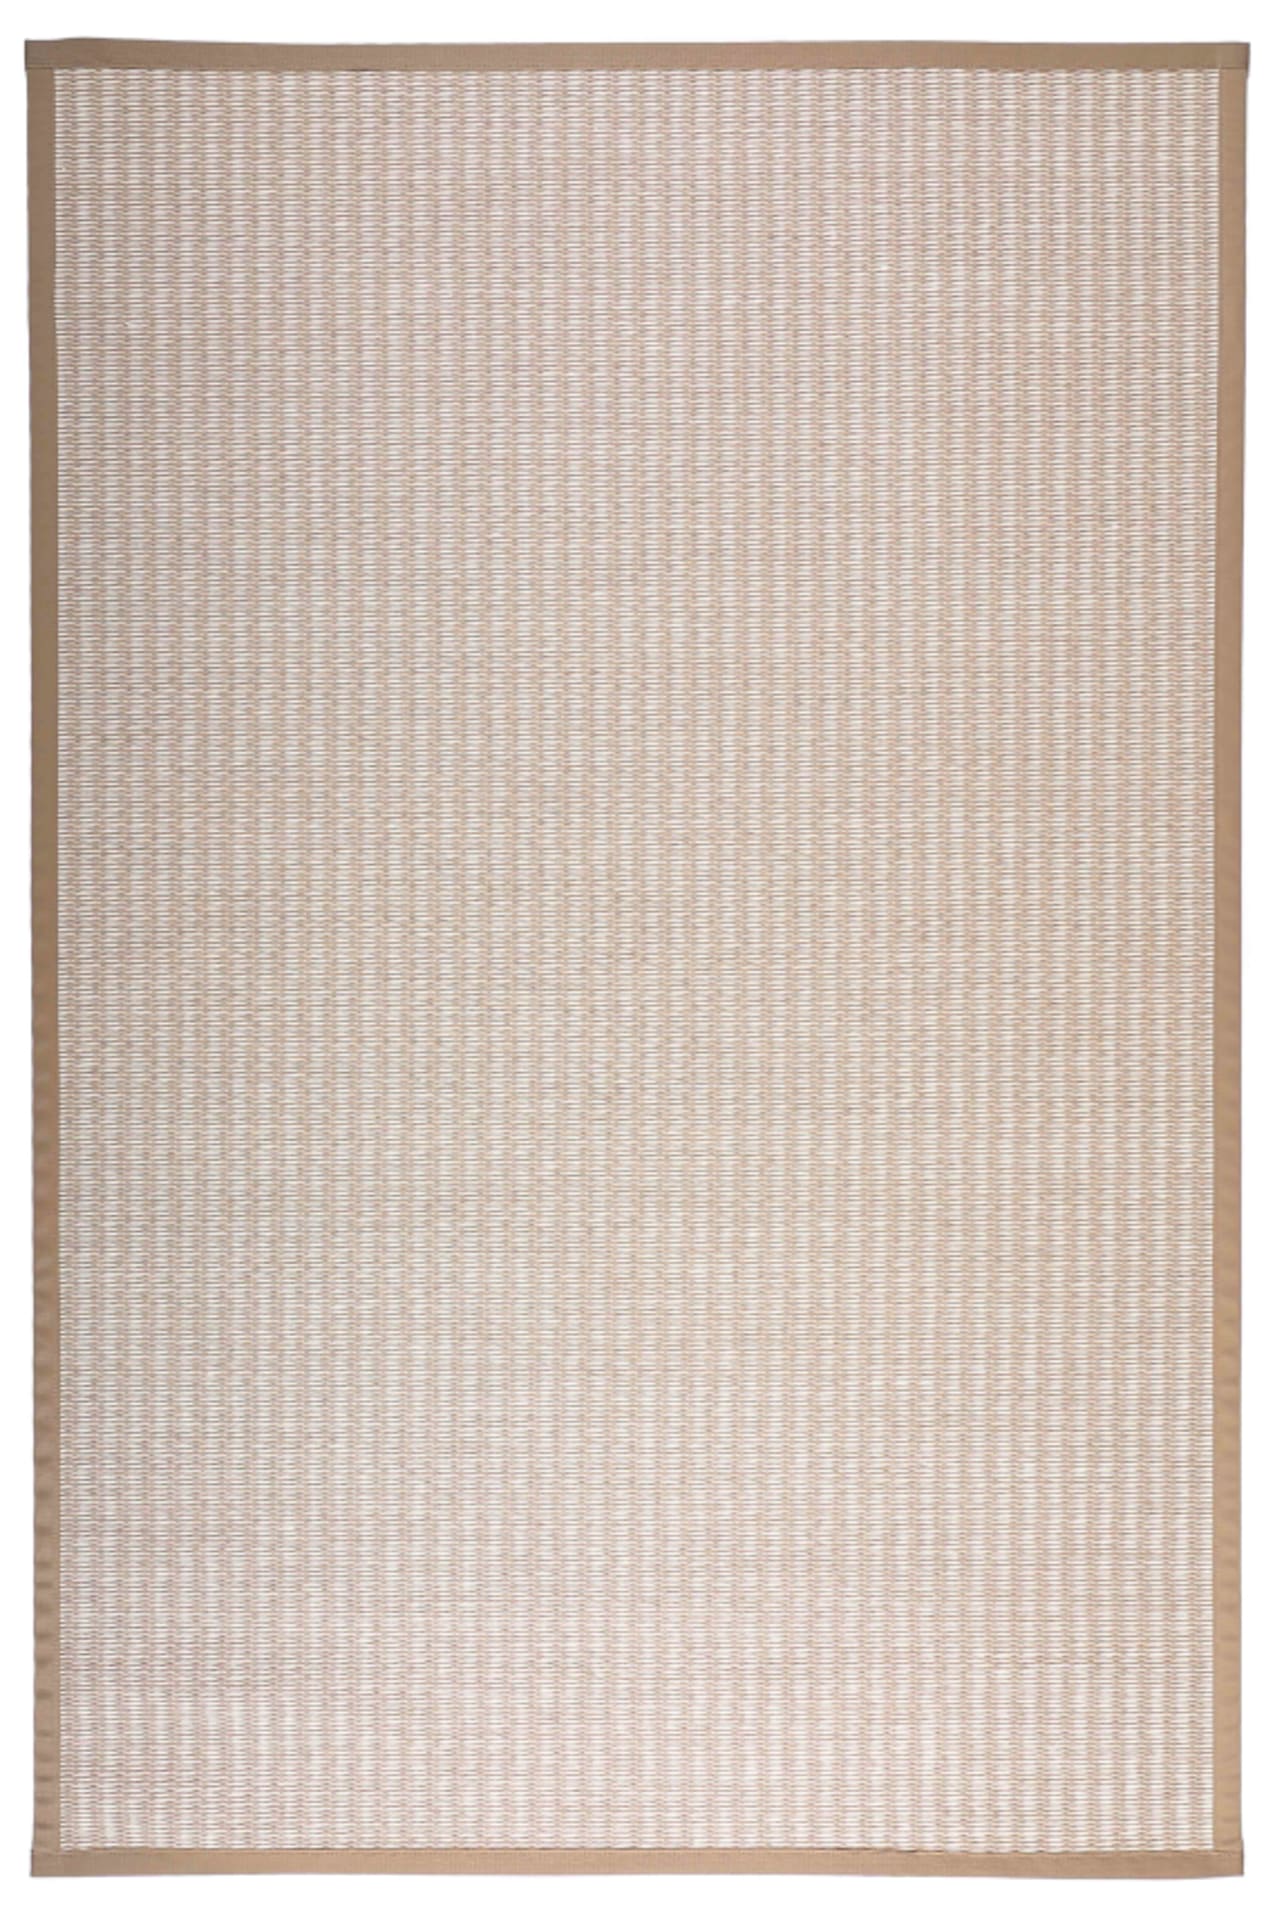 Vm carpet - KELO MATTO 80x250 cm beige - Eurokangas